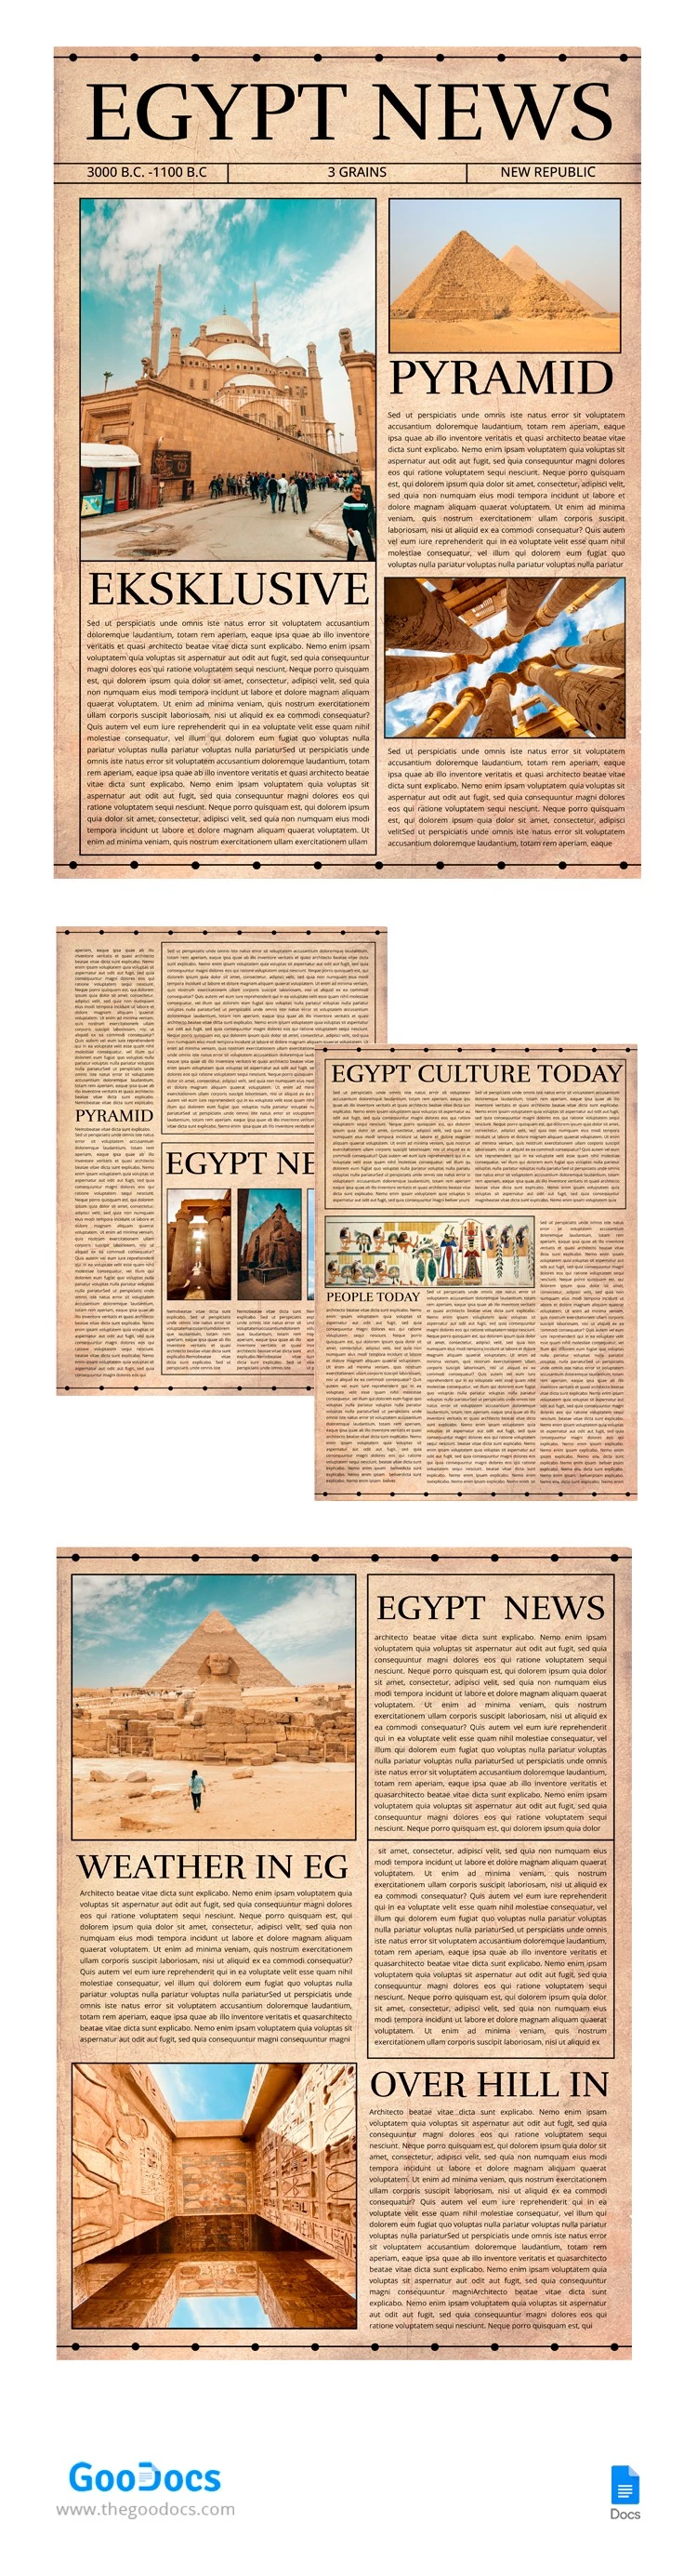 Ägyptische Zeitung - free Google Docs Template - 10065740